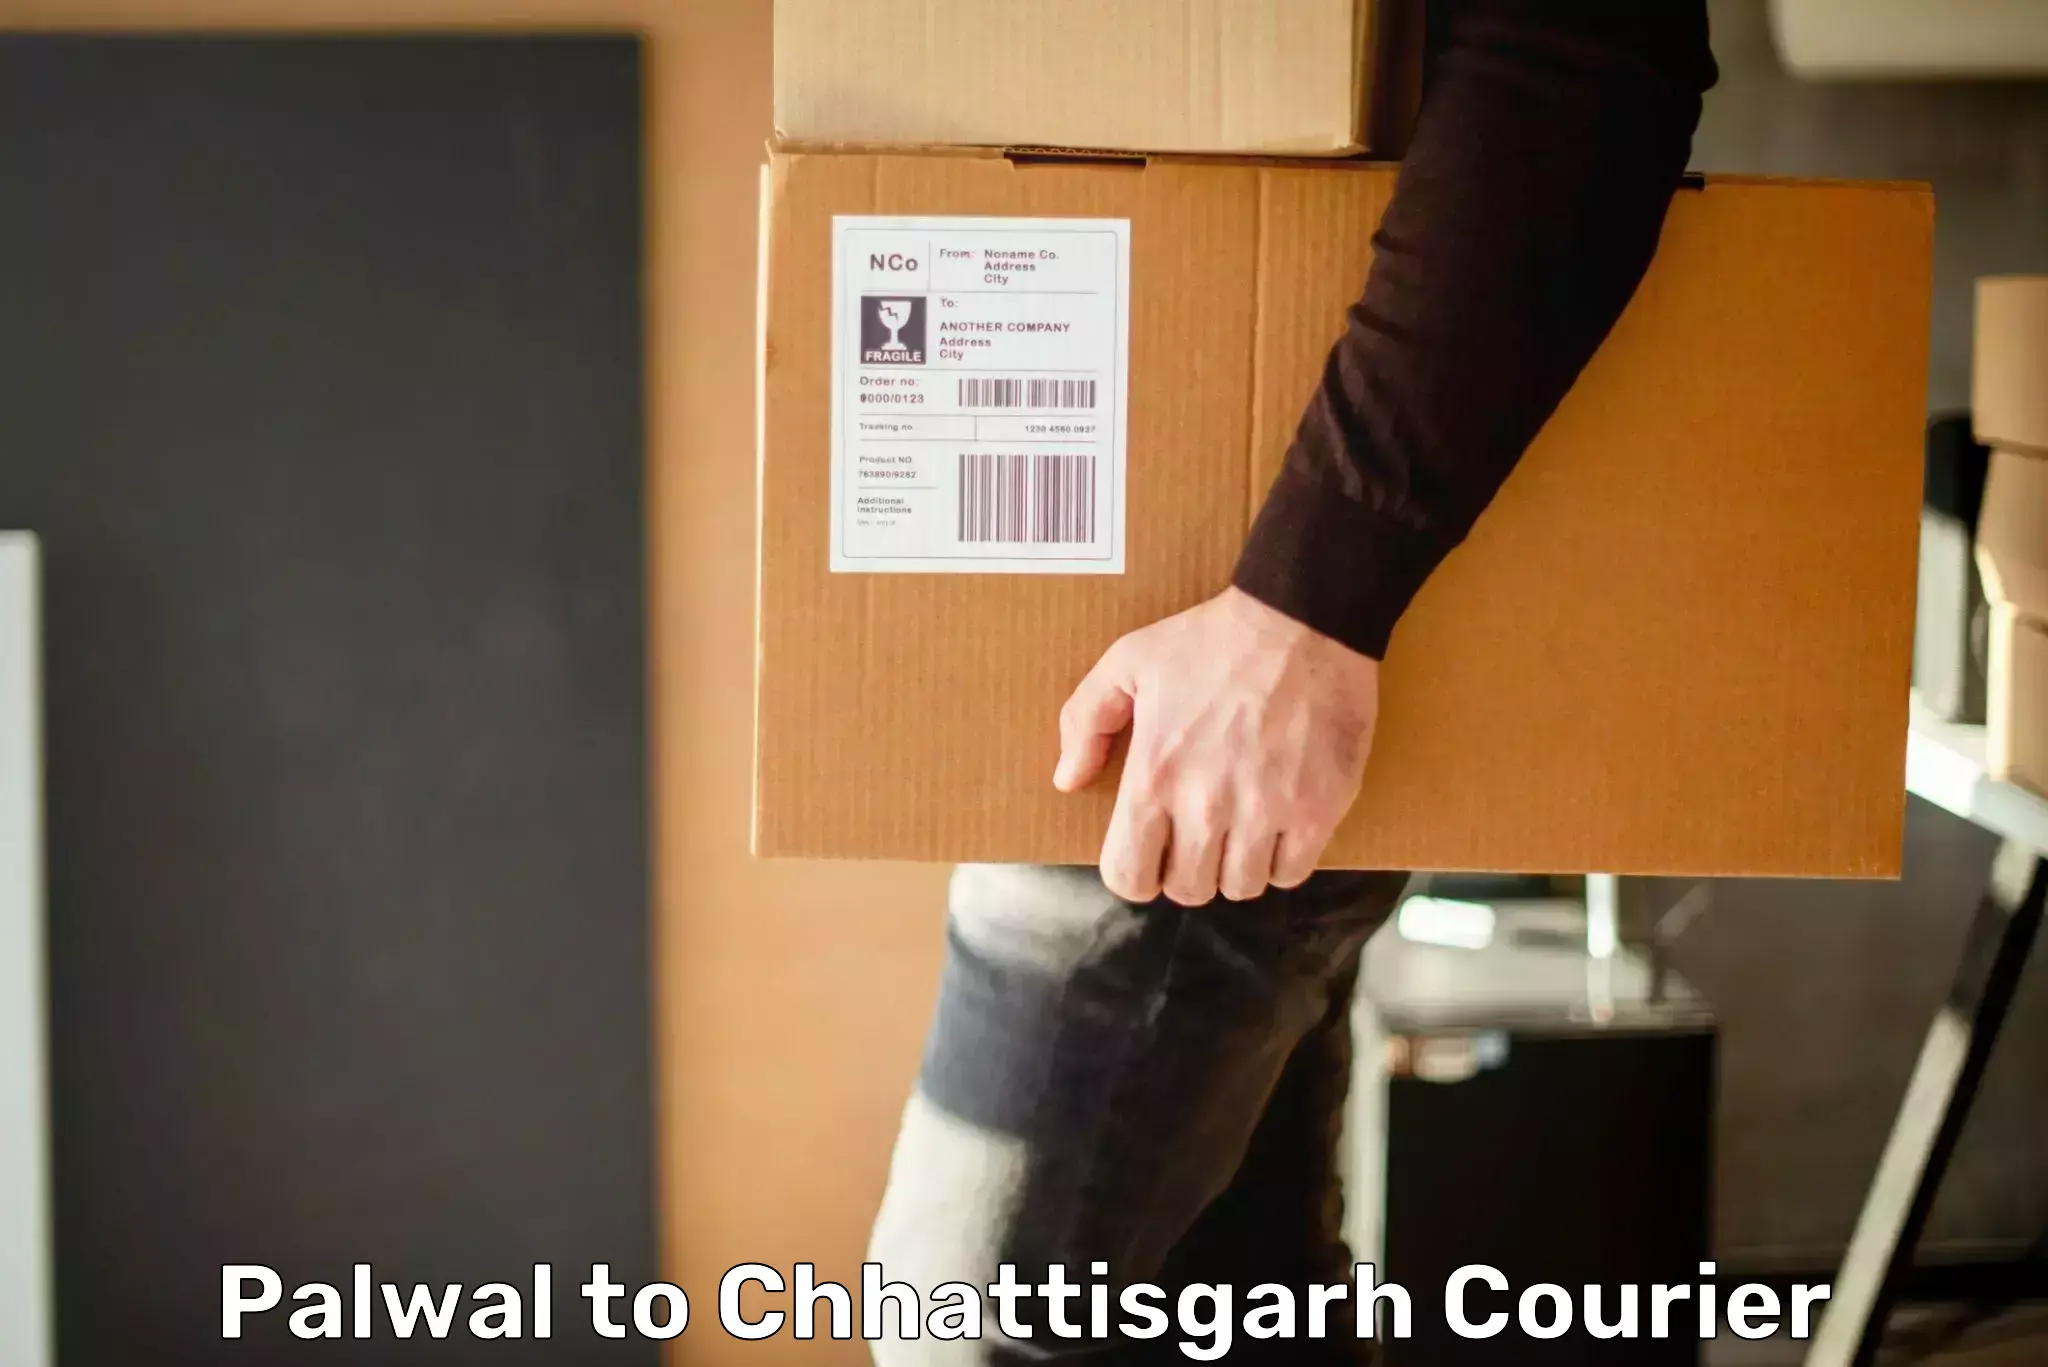 Courier service comparison Palwal to Chhattisgarh